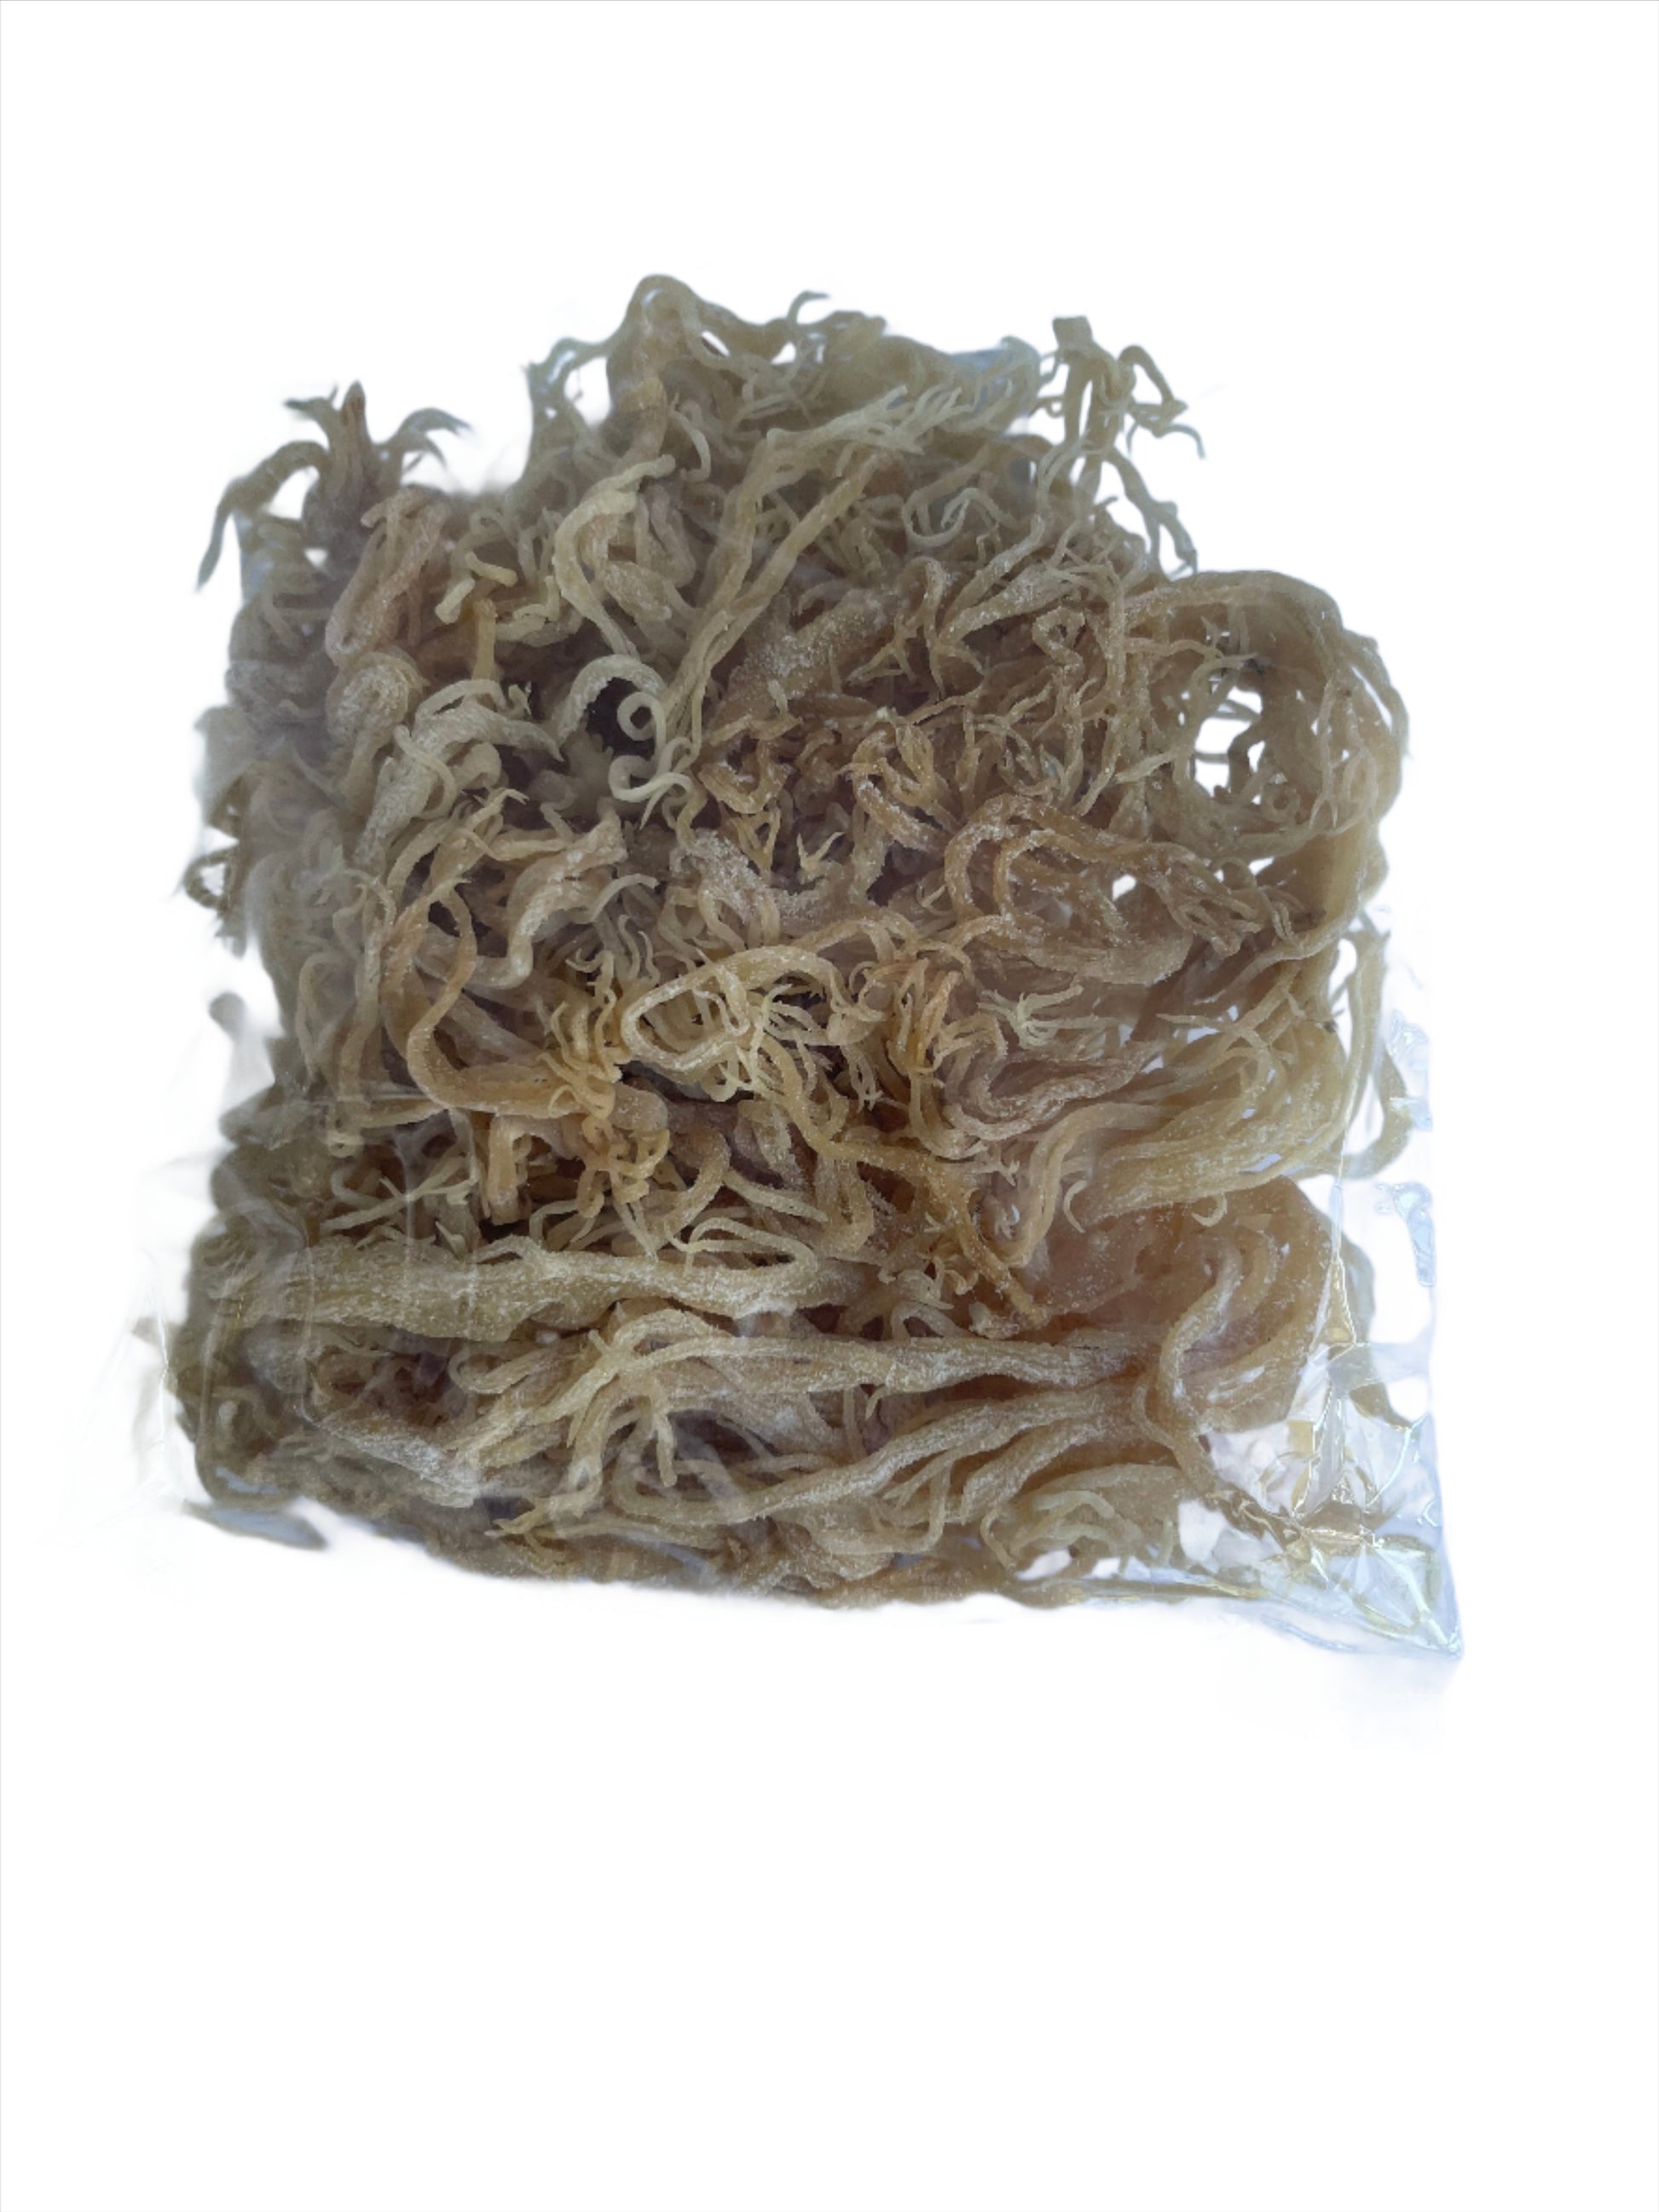 Dried Seamoss Moss | Dried Seamoss Irish | Buydominicaonline